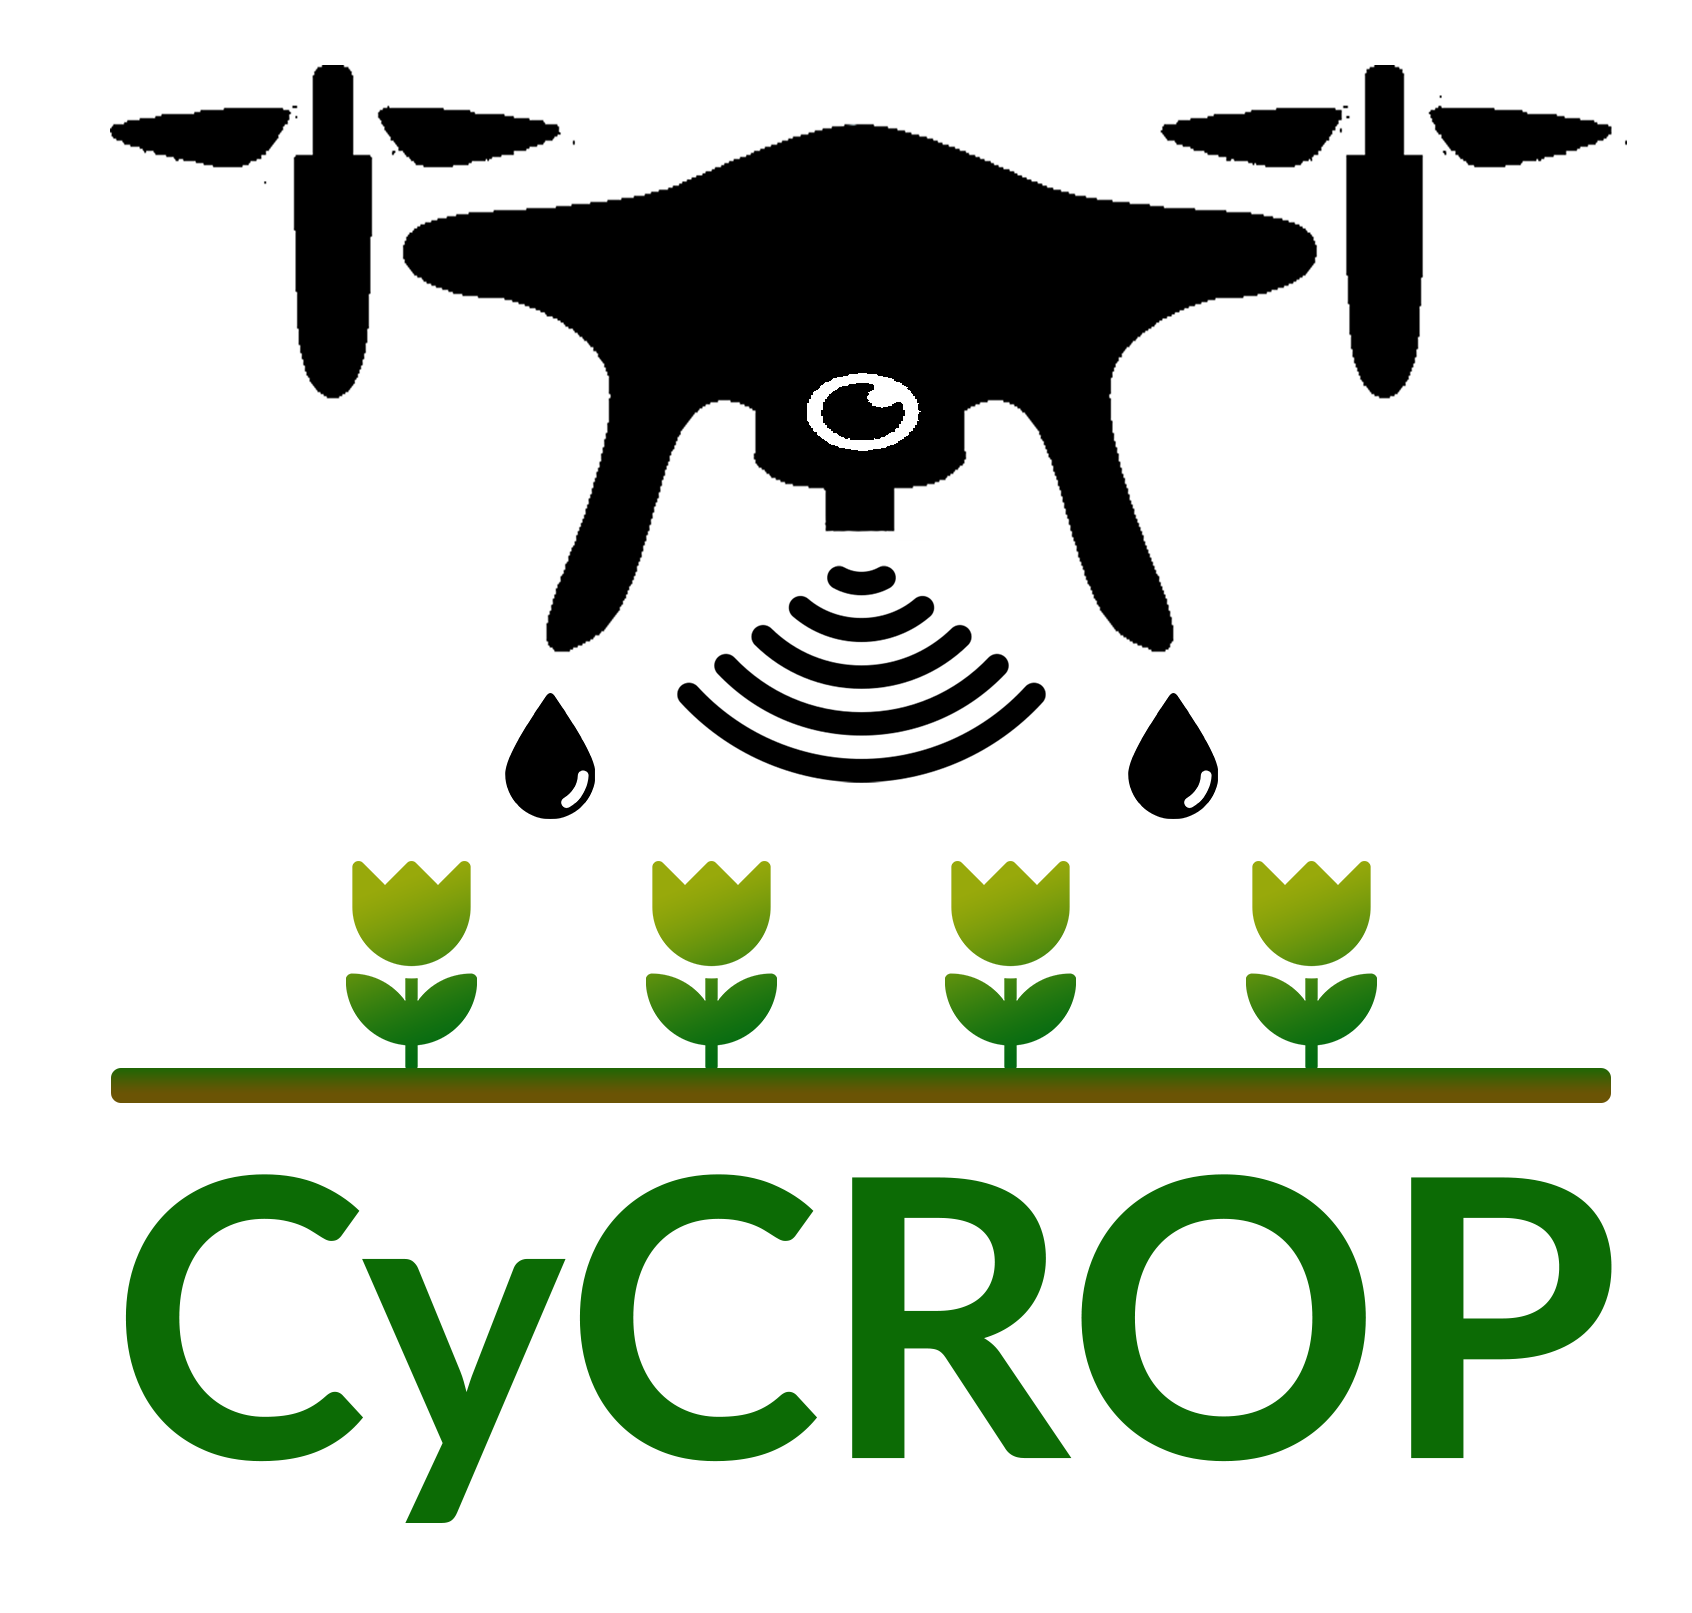 CyCROP